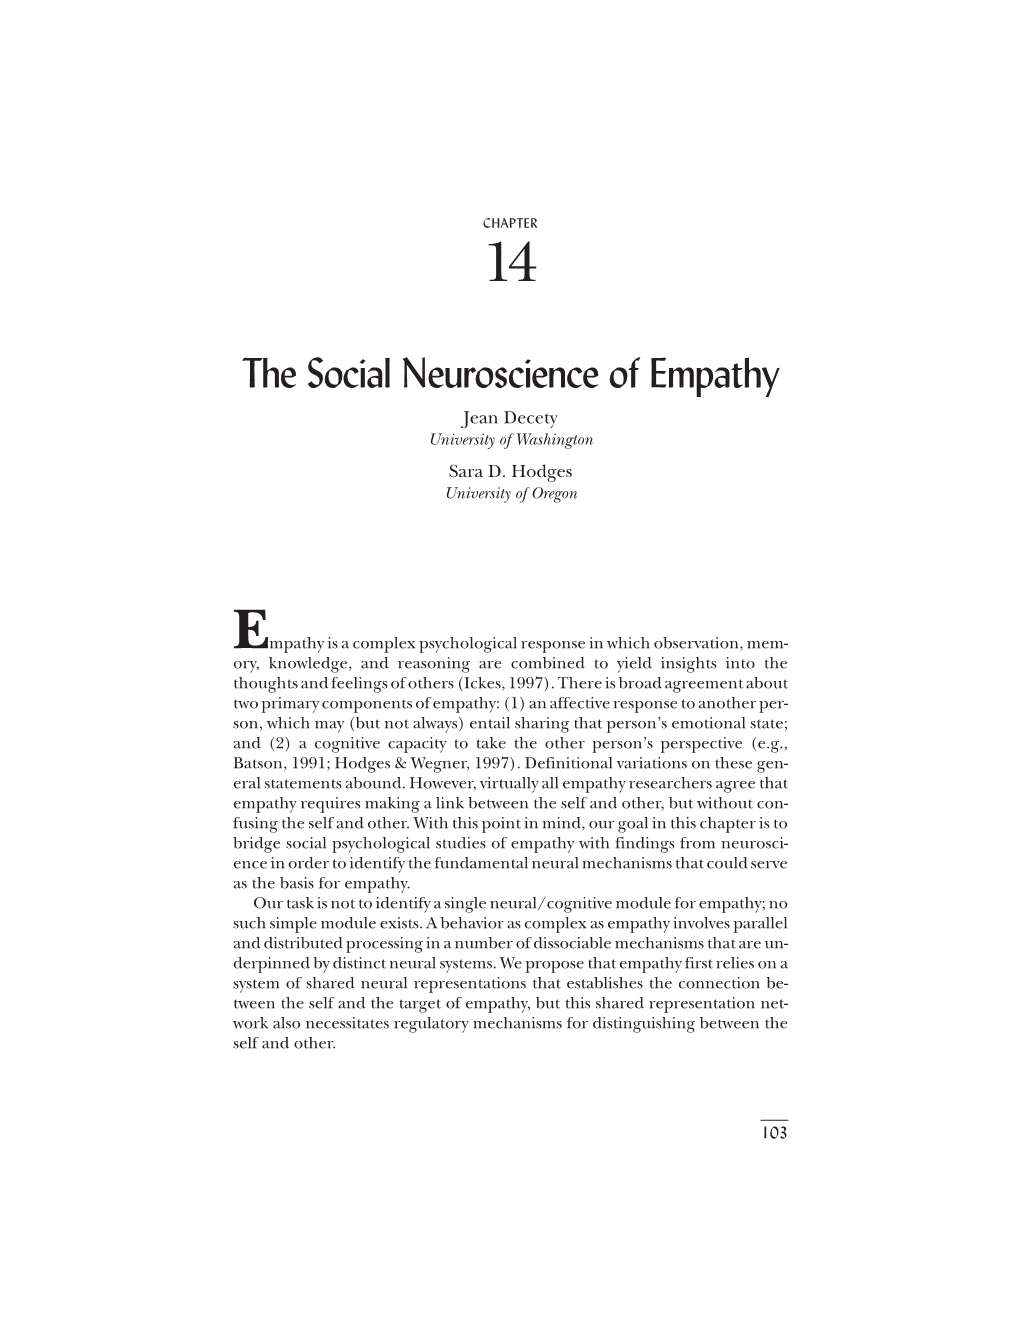 The Social Neuroscience of Empathy Jean Decety University of Washington Sara D